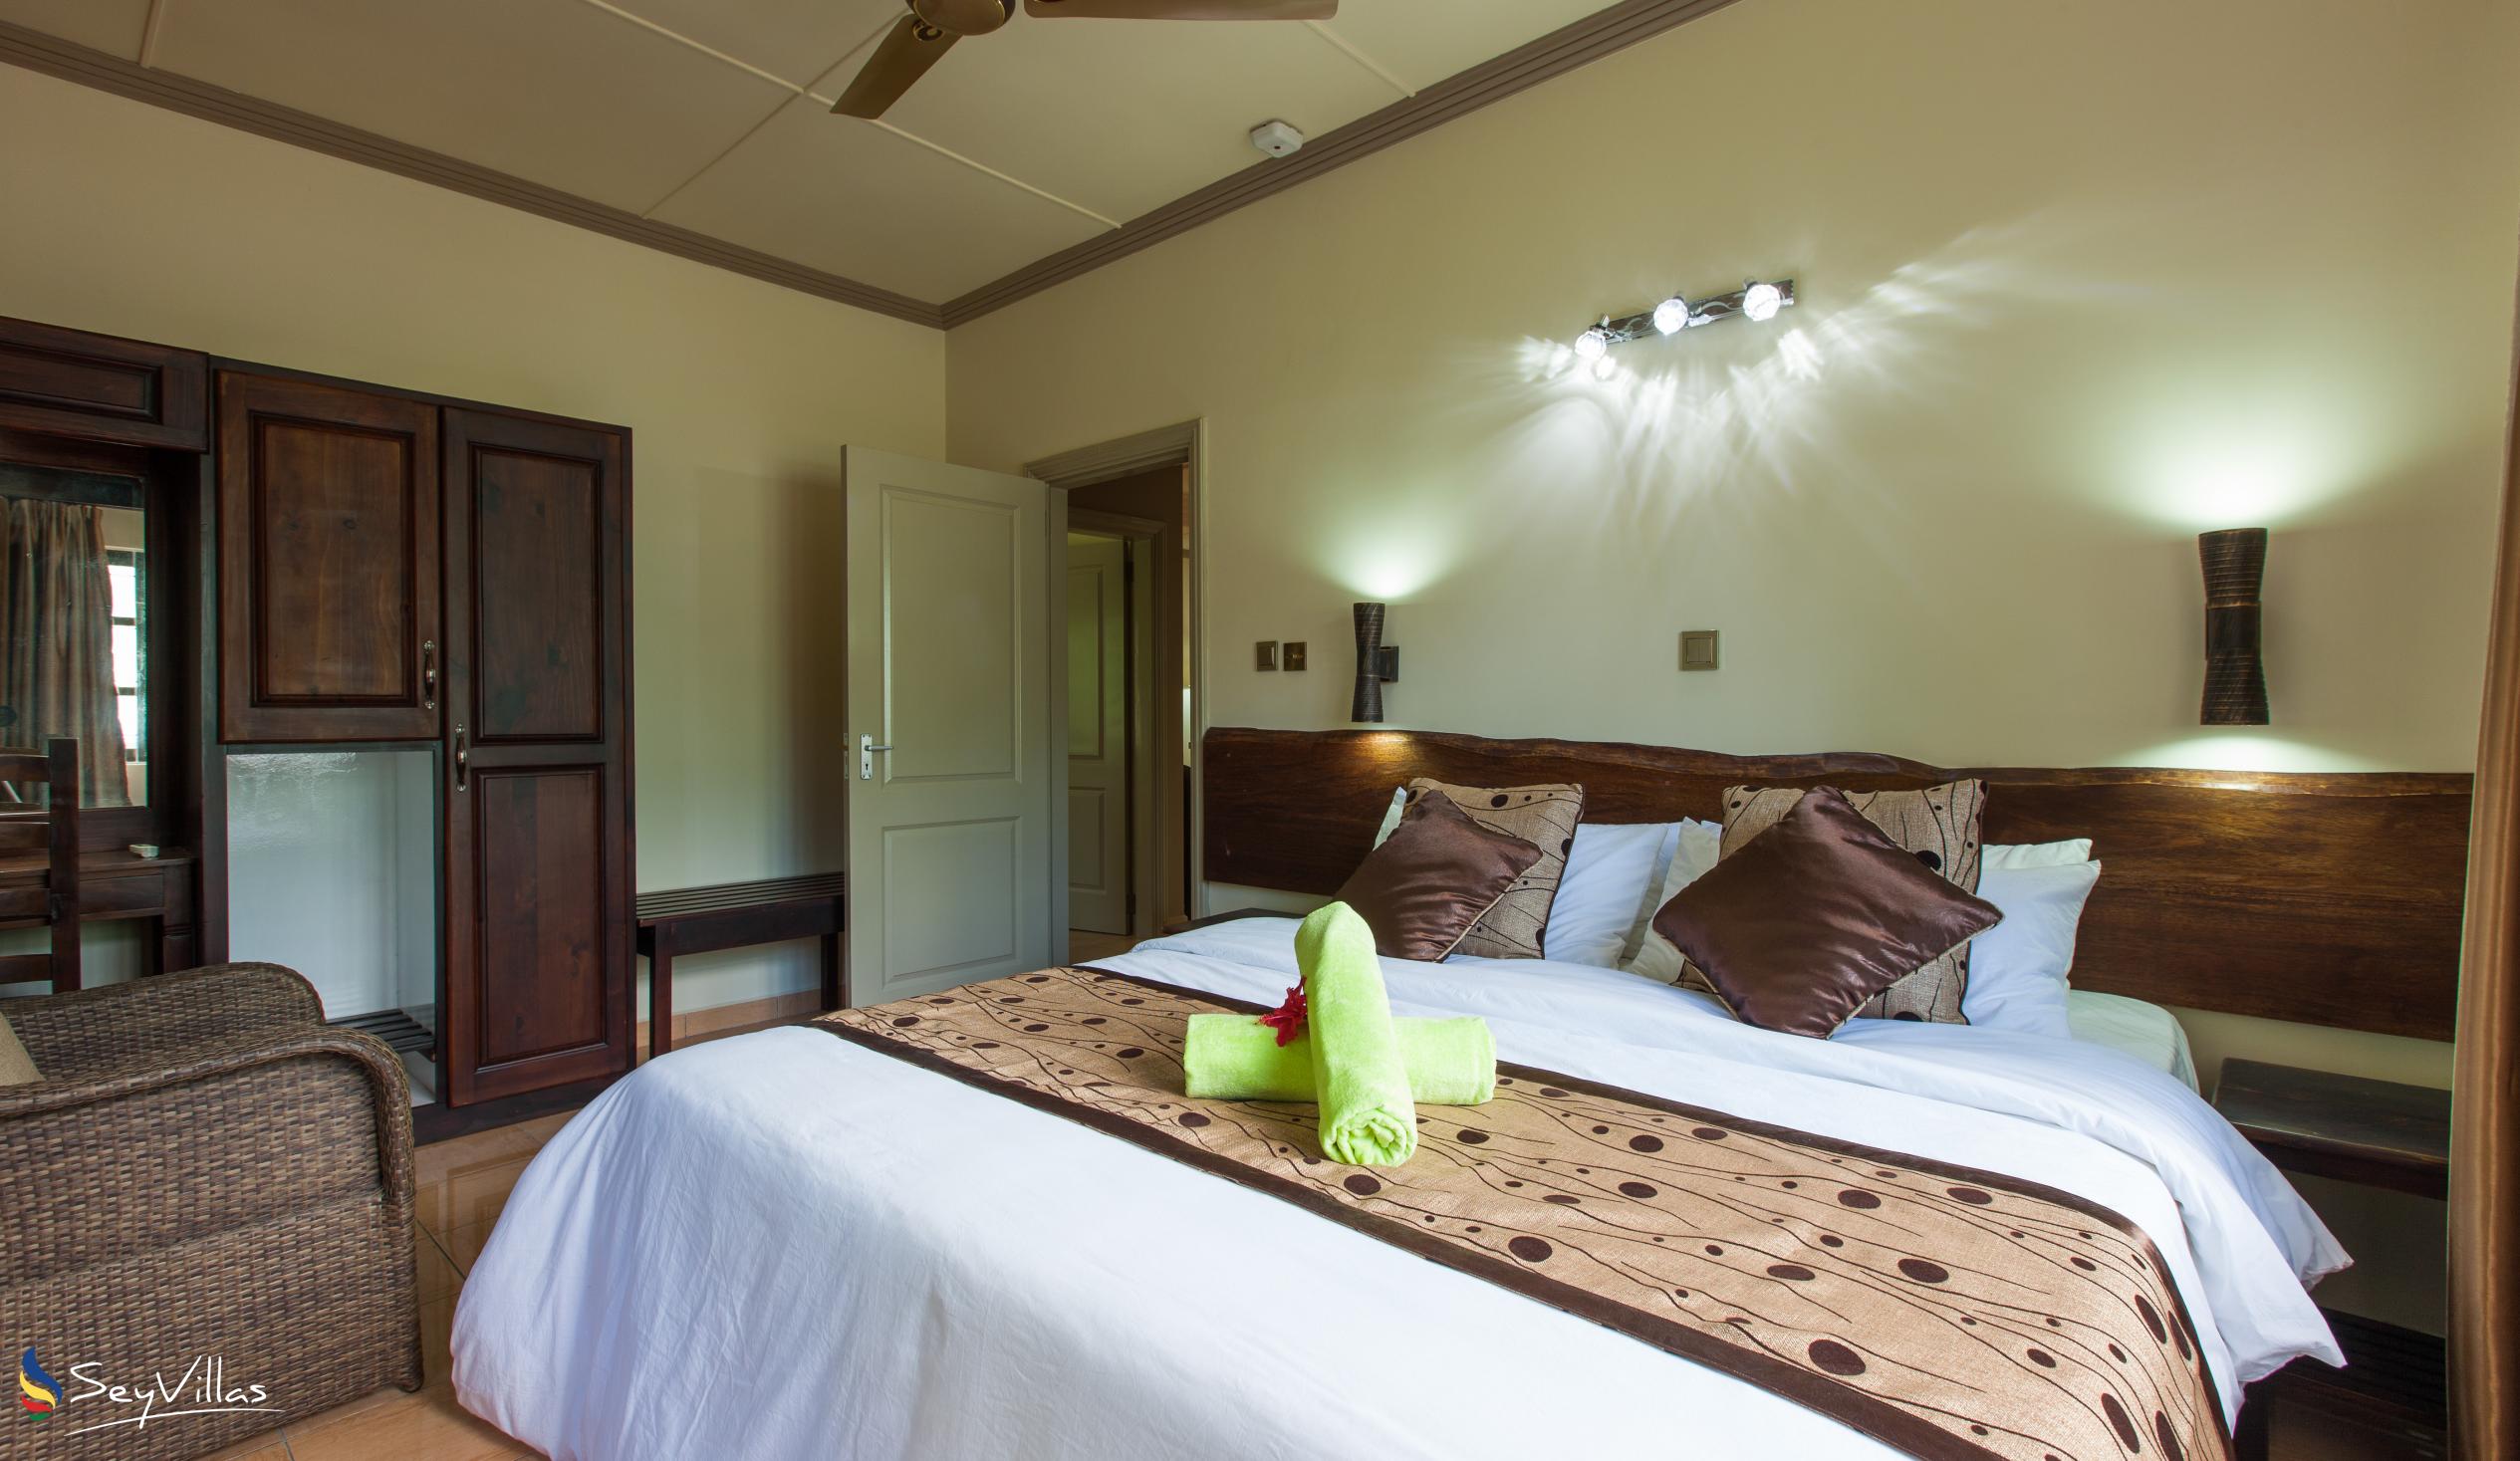 Foto 53: Chez Bea Villa - Appartement 2 chambres - Praslin (Seychelles)